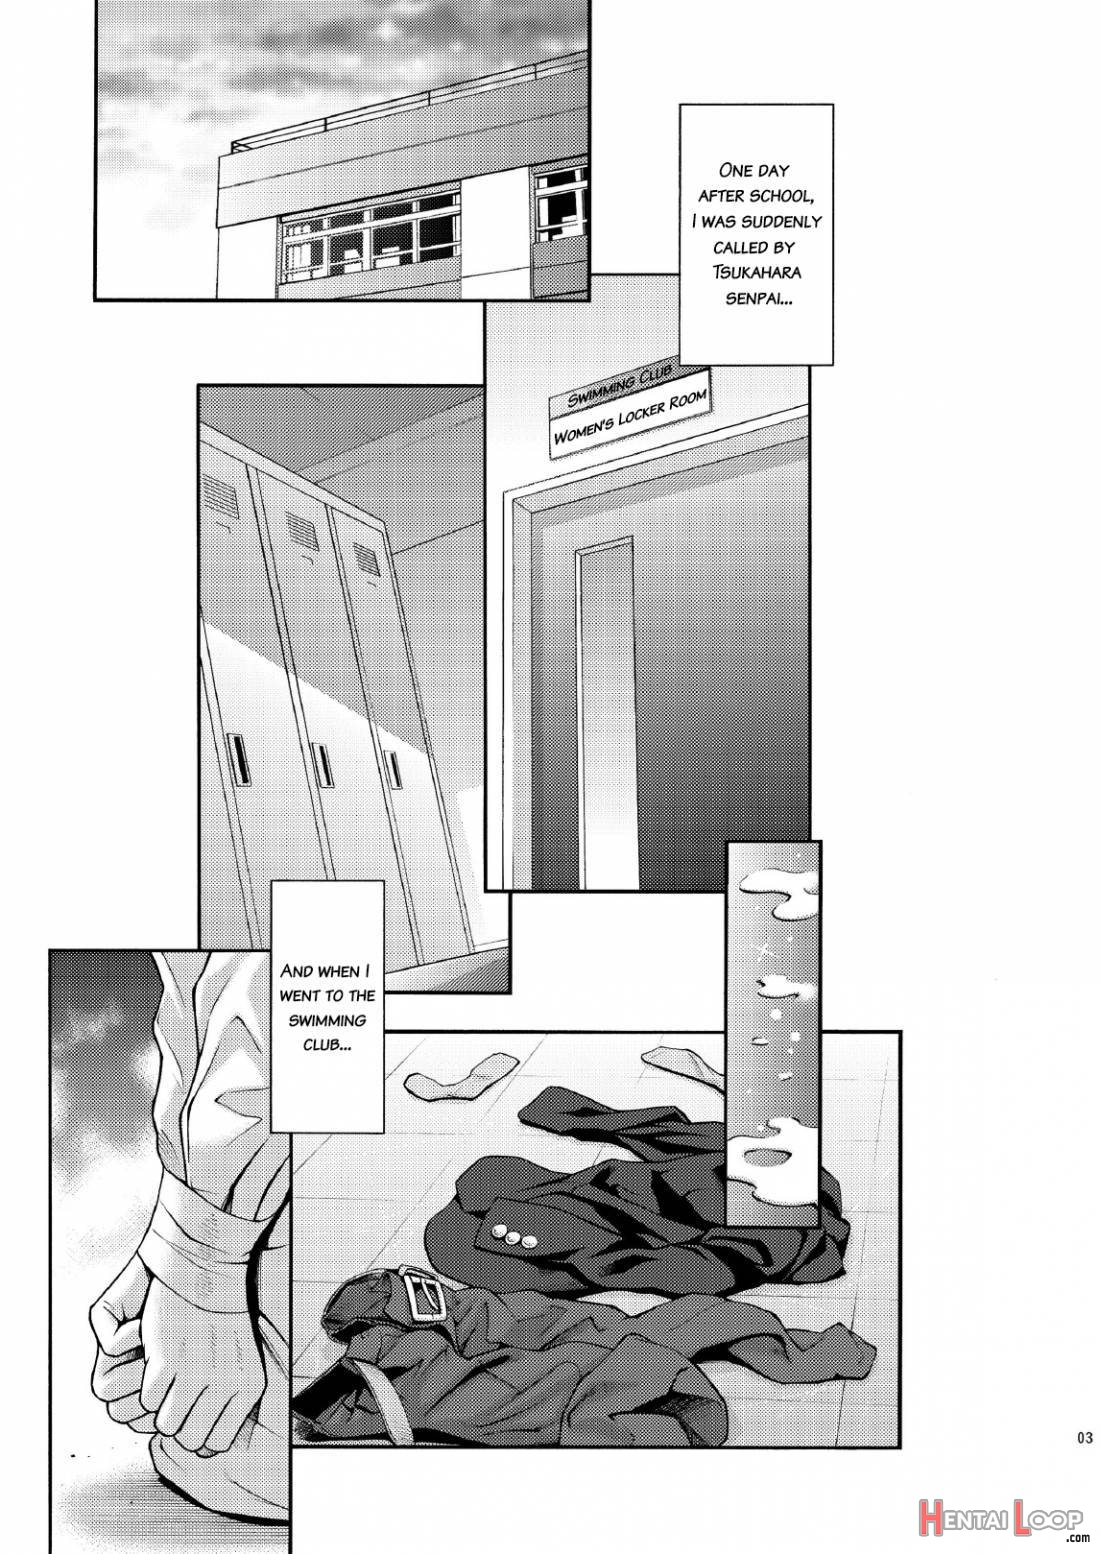 Tsukahara Ss page 2